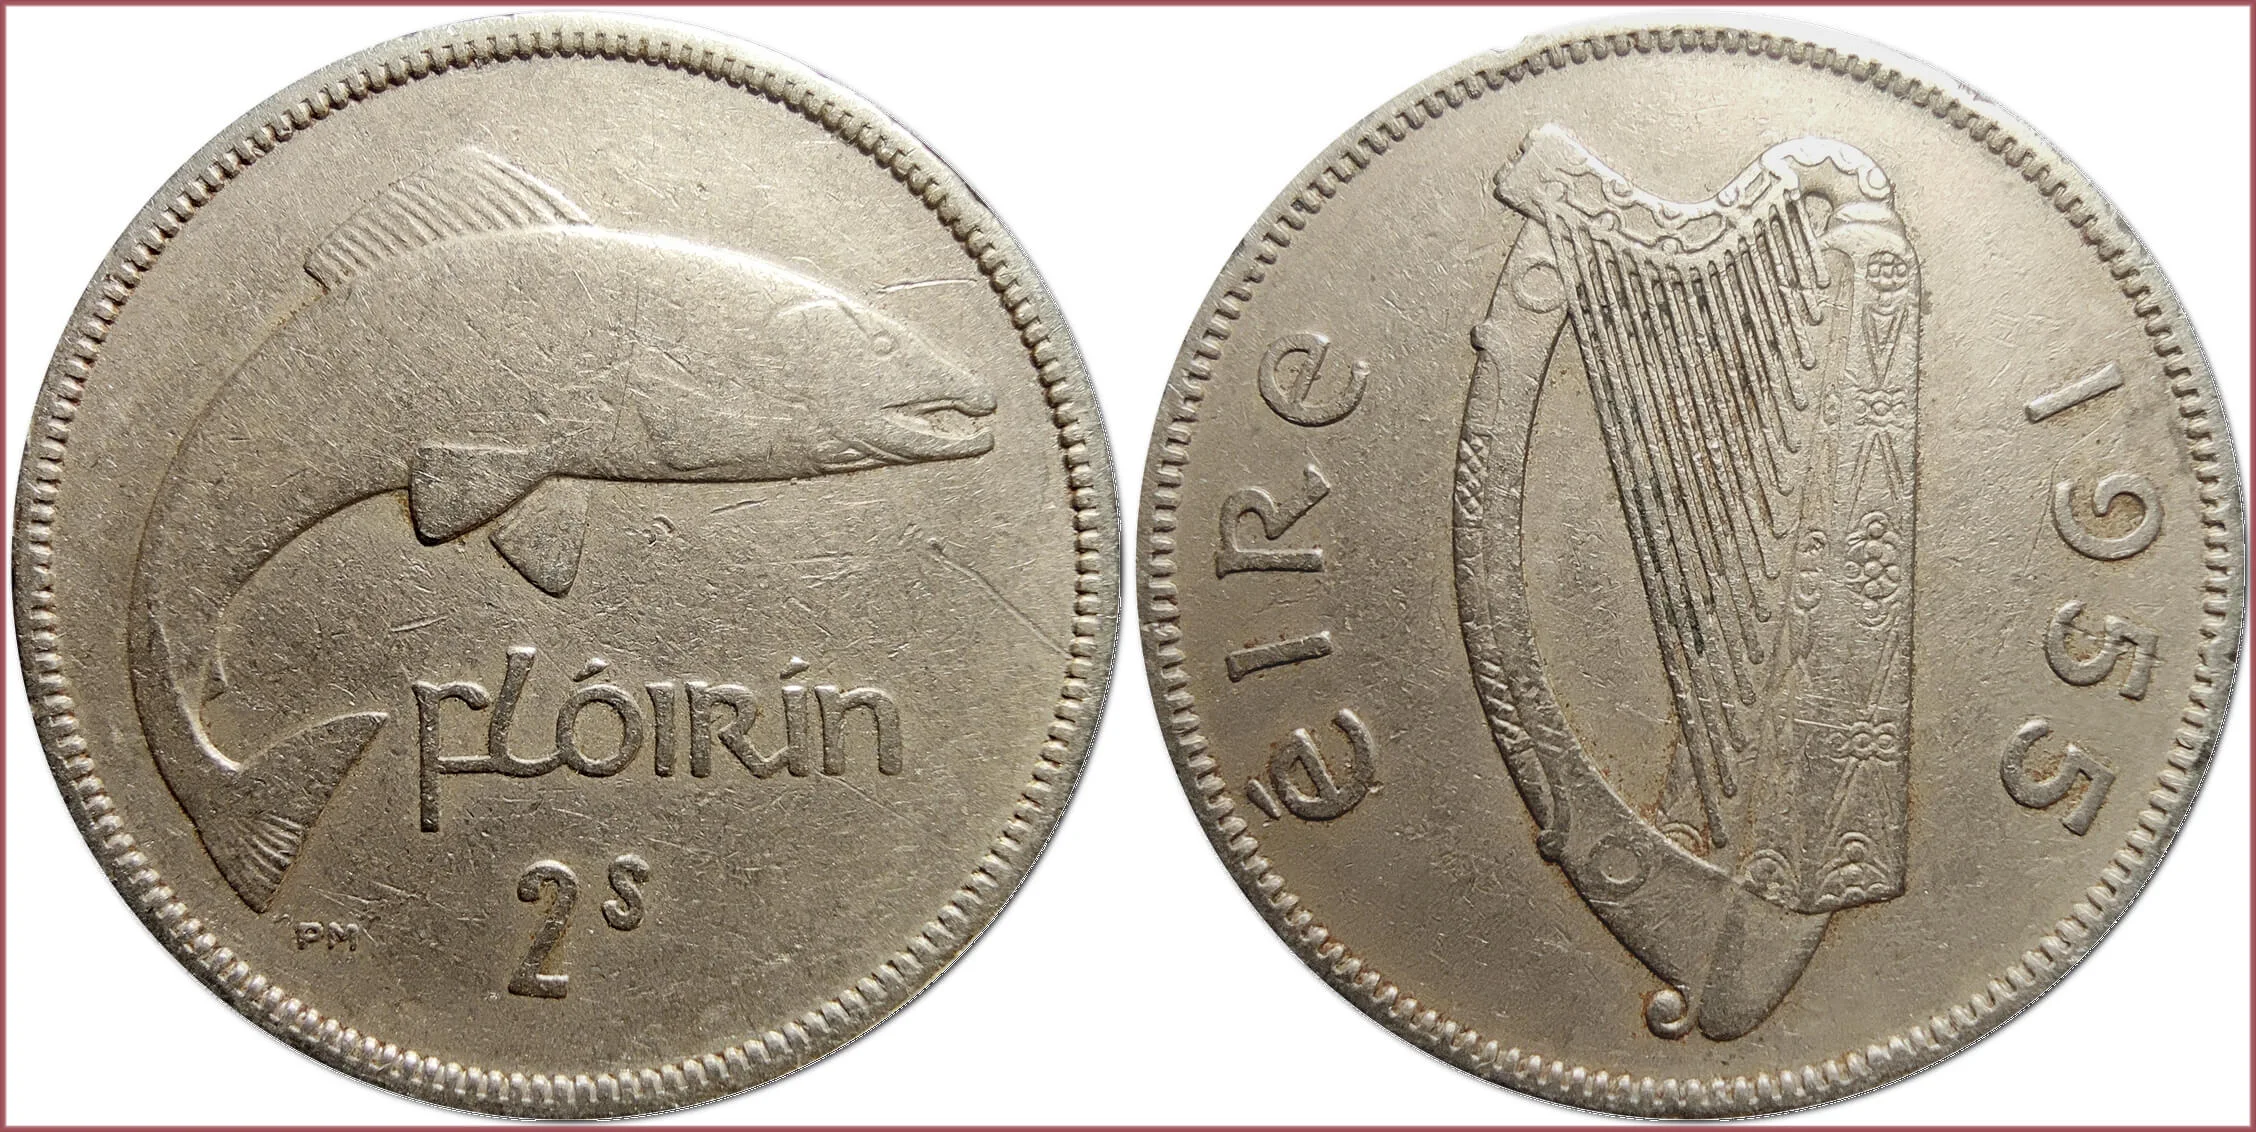 1 flóirin, 1955: Republic of Ireland